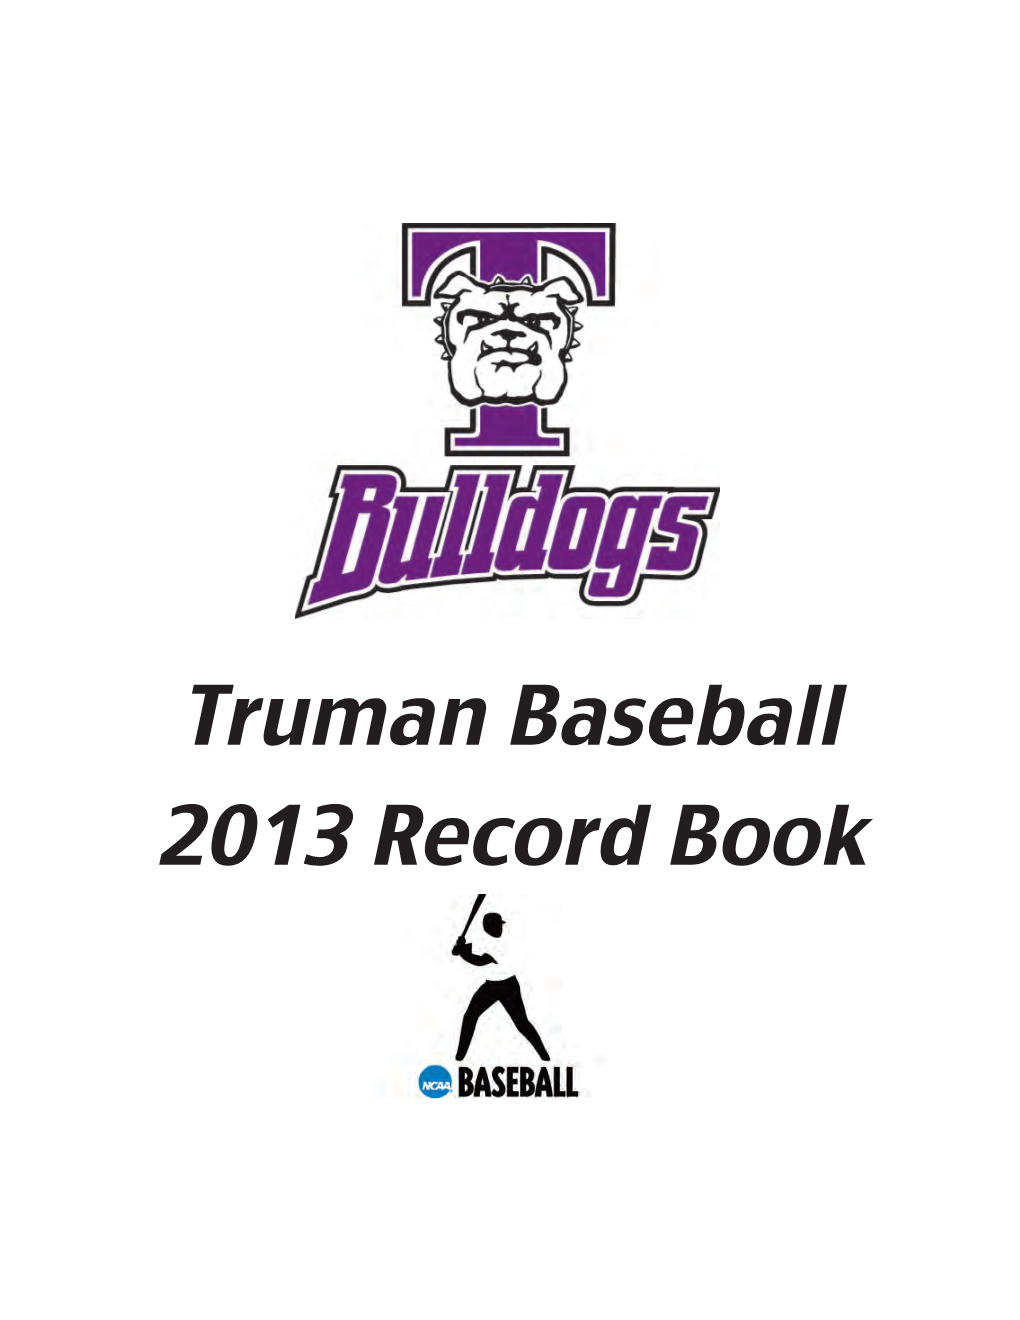 Truman Baseball 2013 Record Book Truman Athletics Hall of Fame